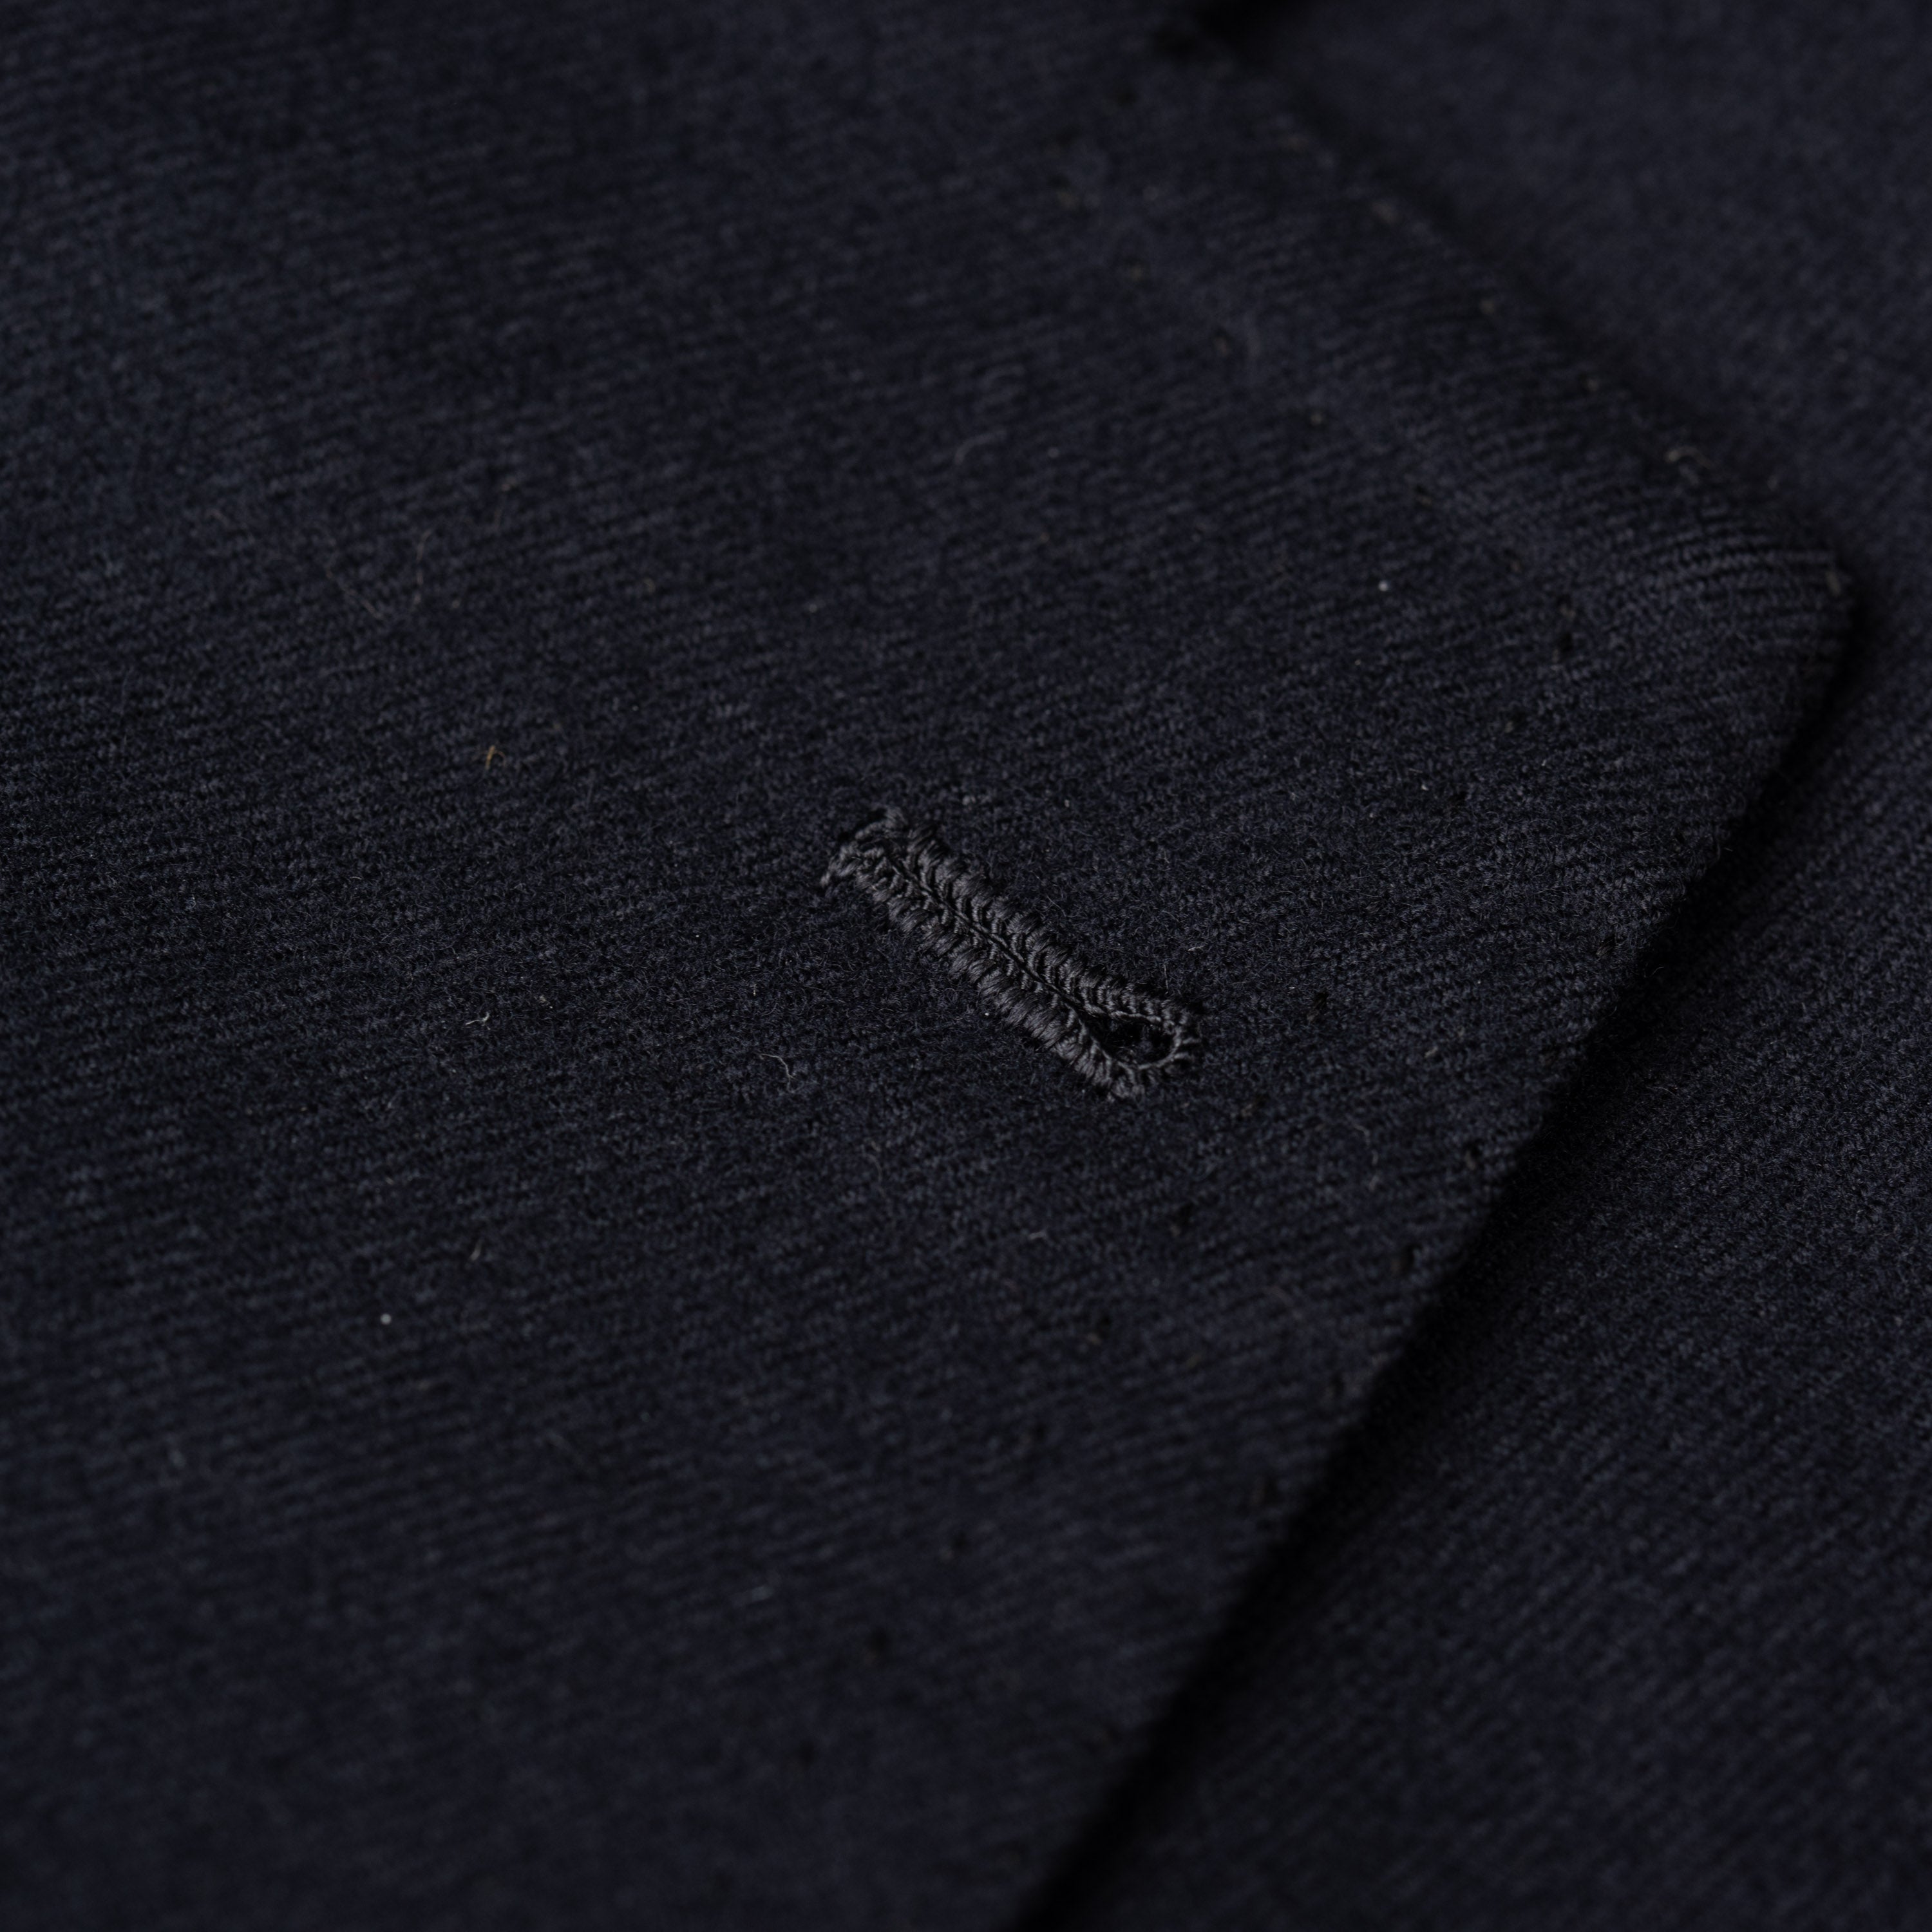 RUBINACCI LH Handmade Bespoke Dark Blue Wool-Cashmere Blazer Jacket 54 US 42 44 RUBINACCI